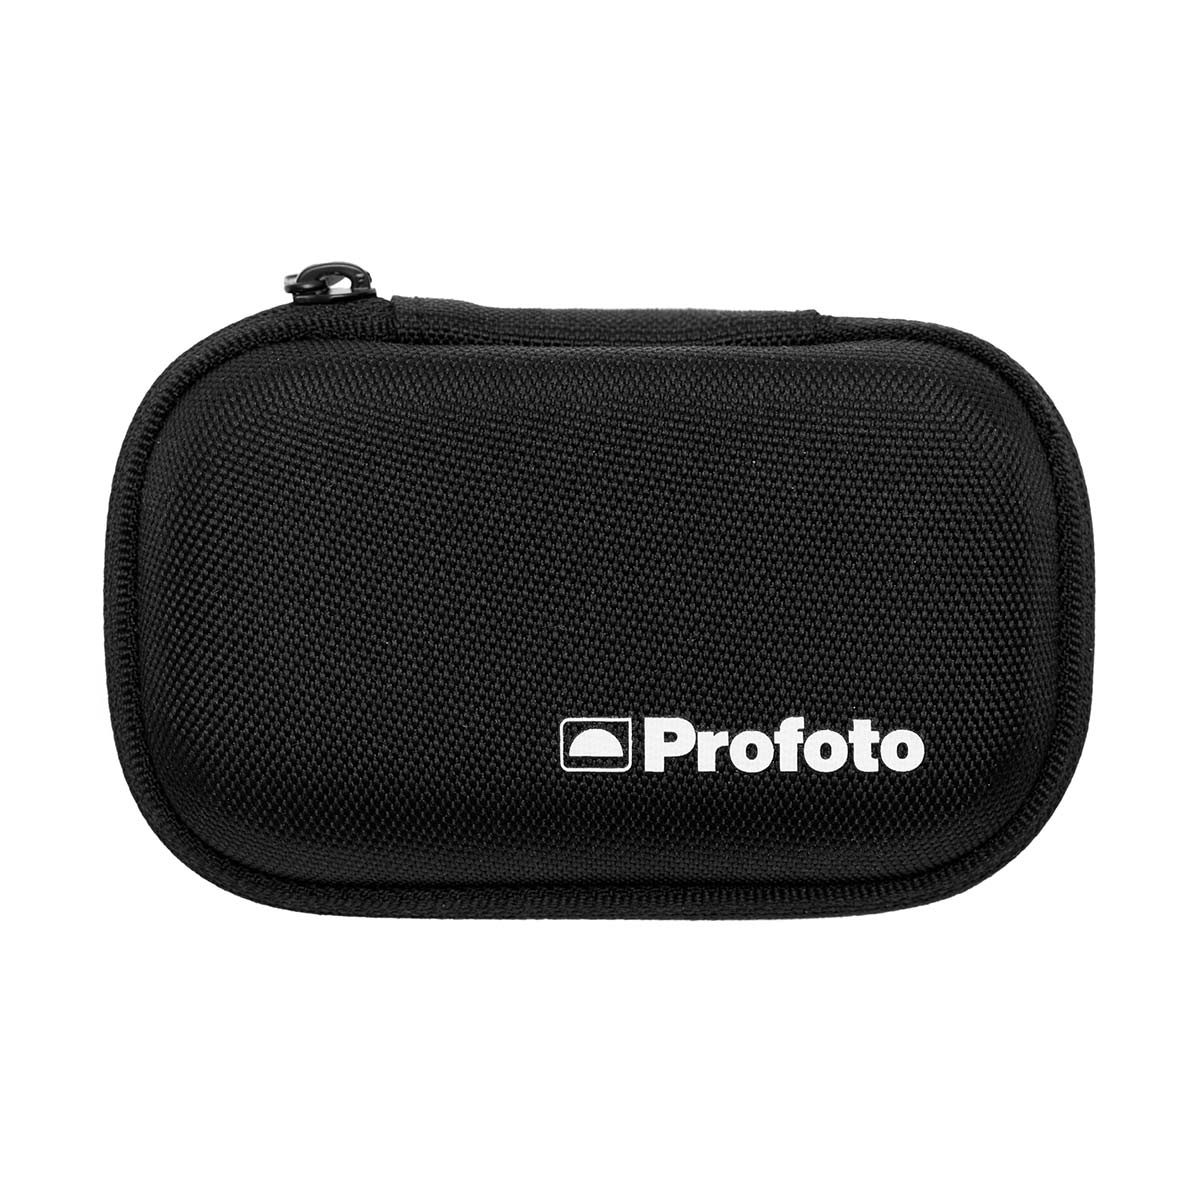 Profoto Connect Pro for Nikon